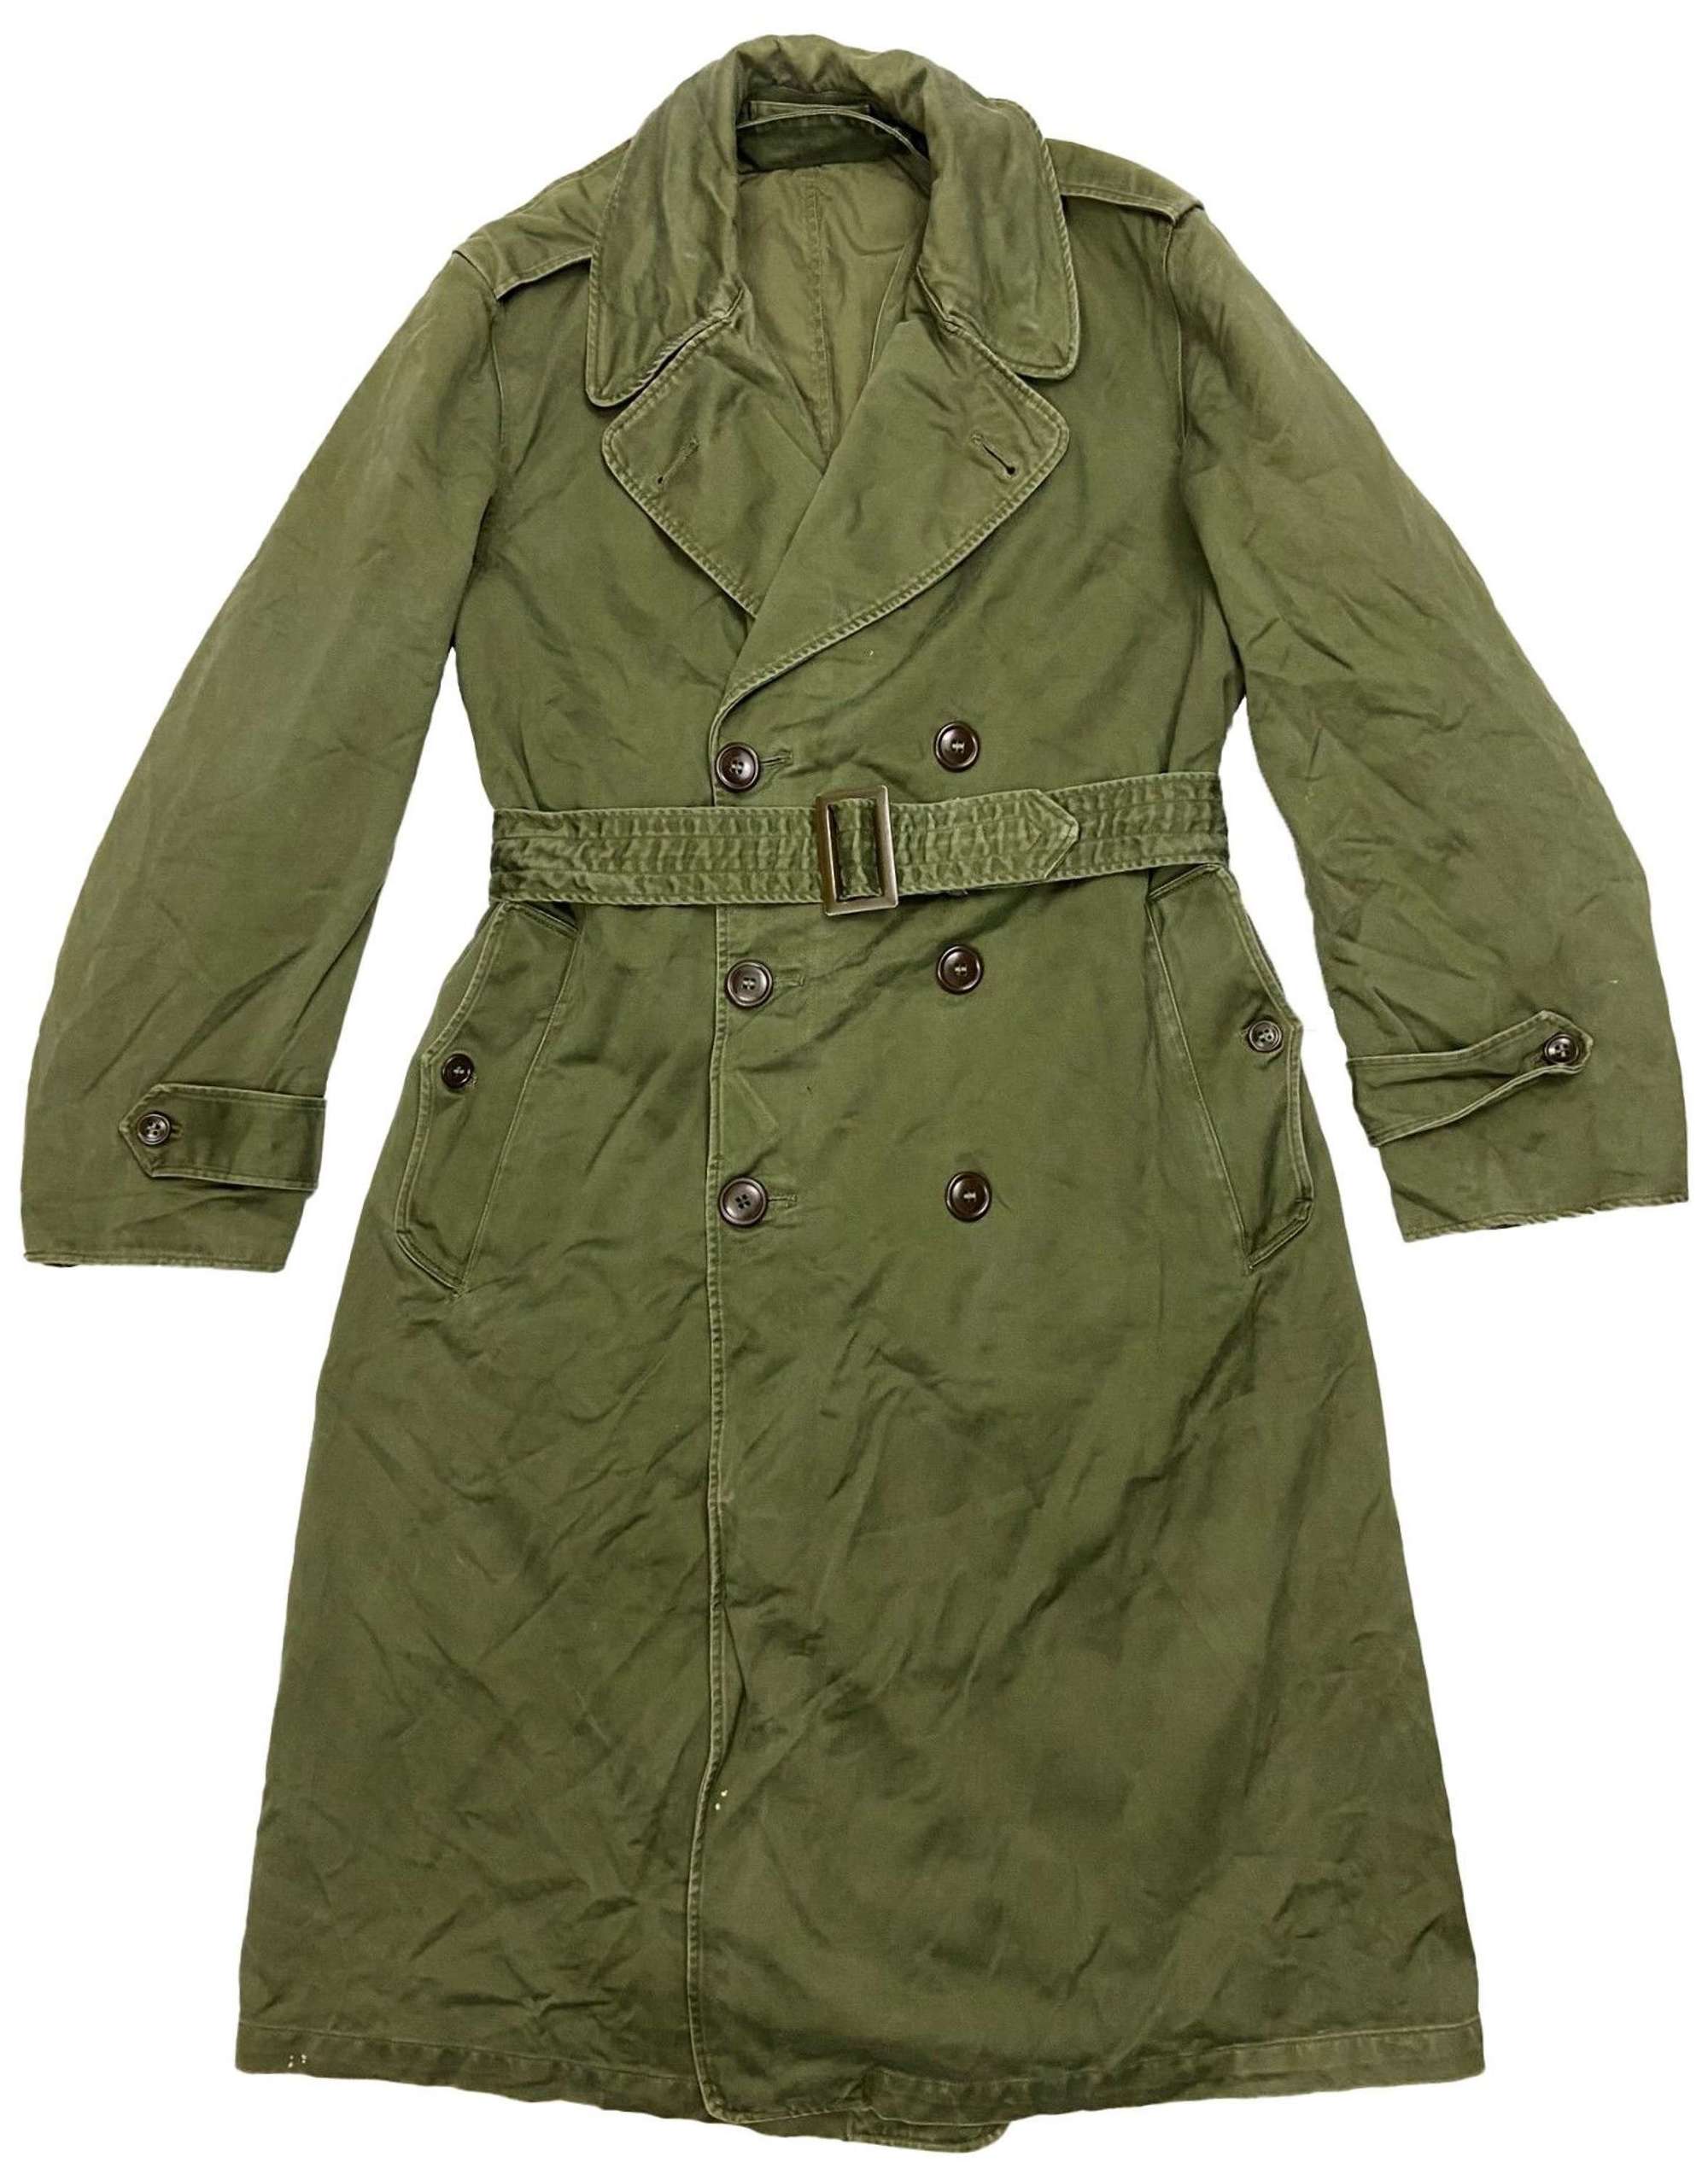 Original 1958 Dated US Army O.G 107 Raincoat - Size Small Regular